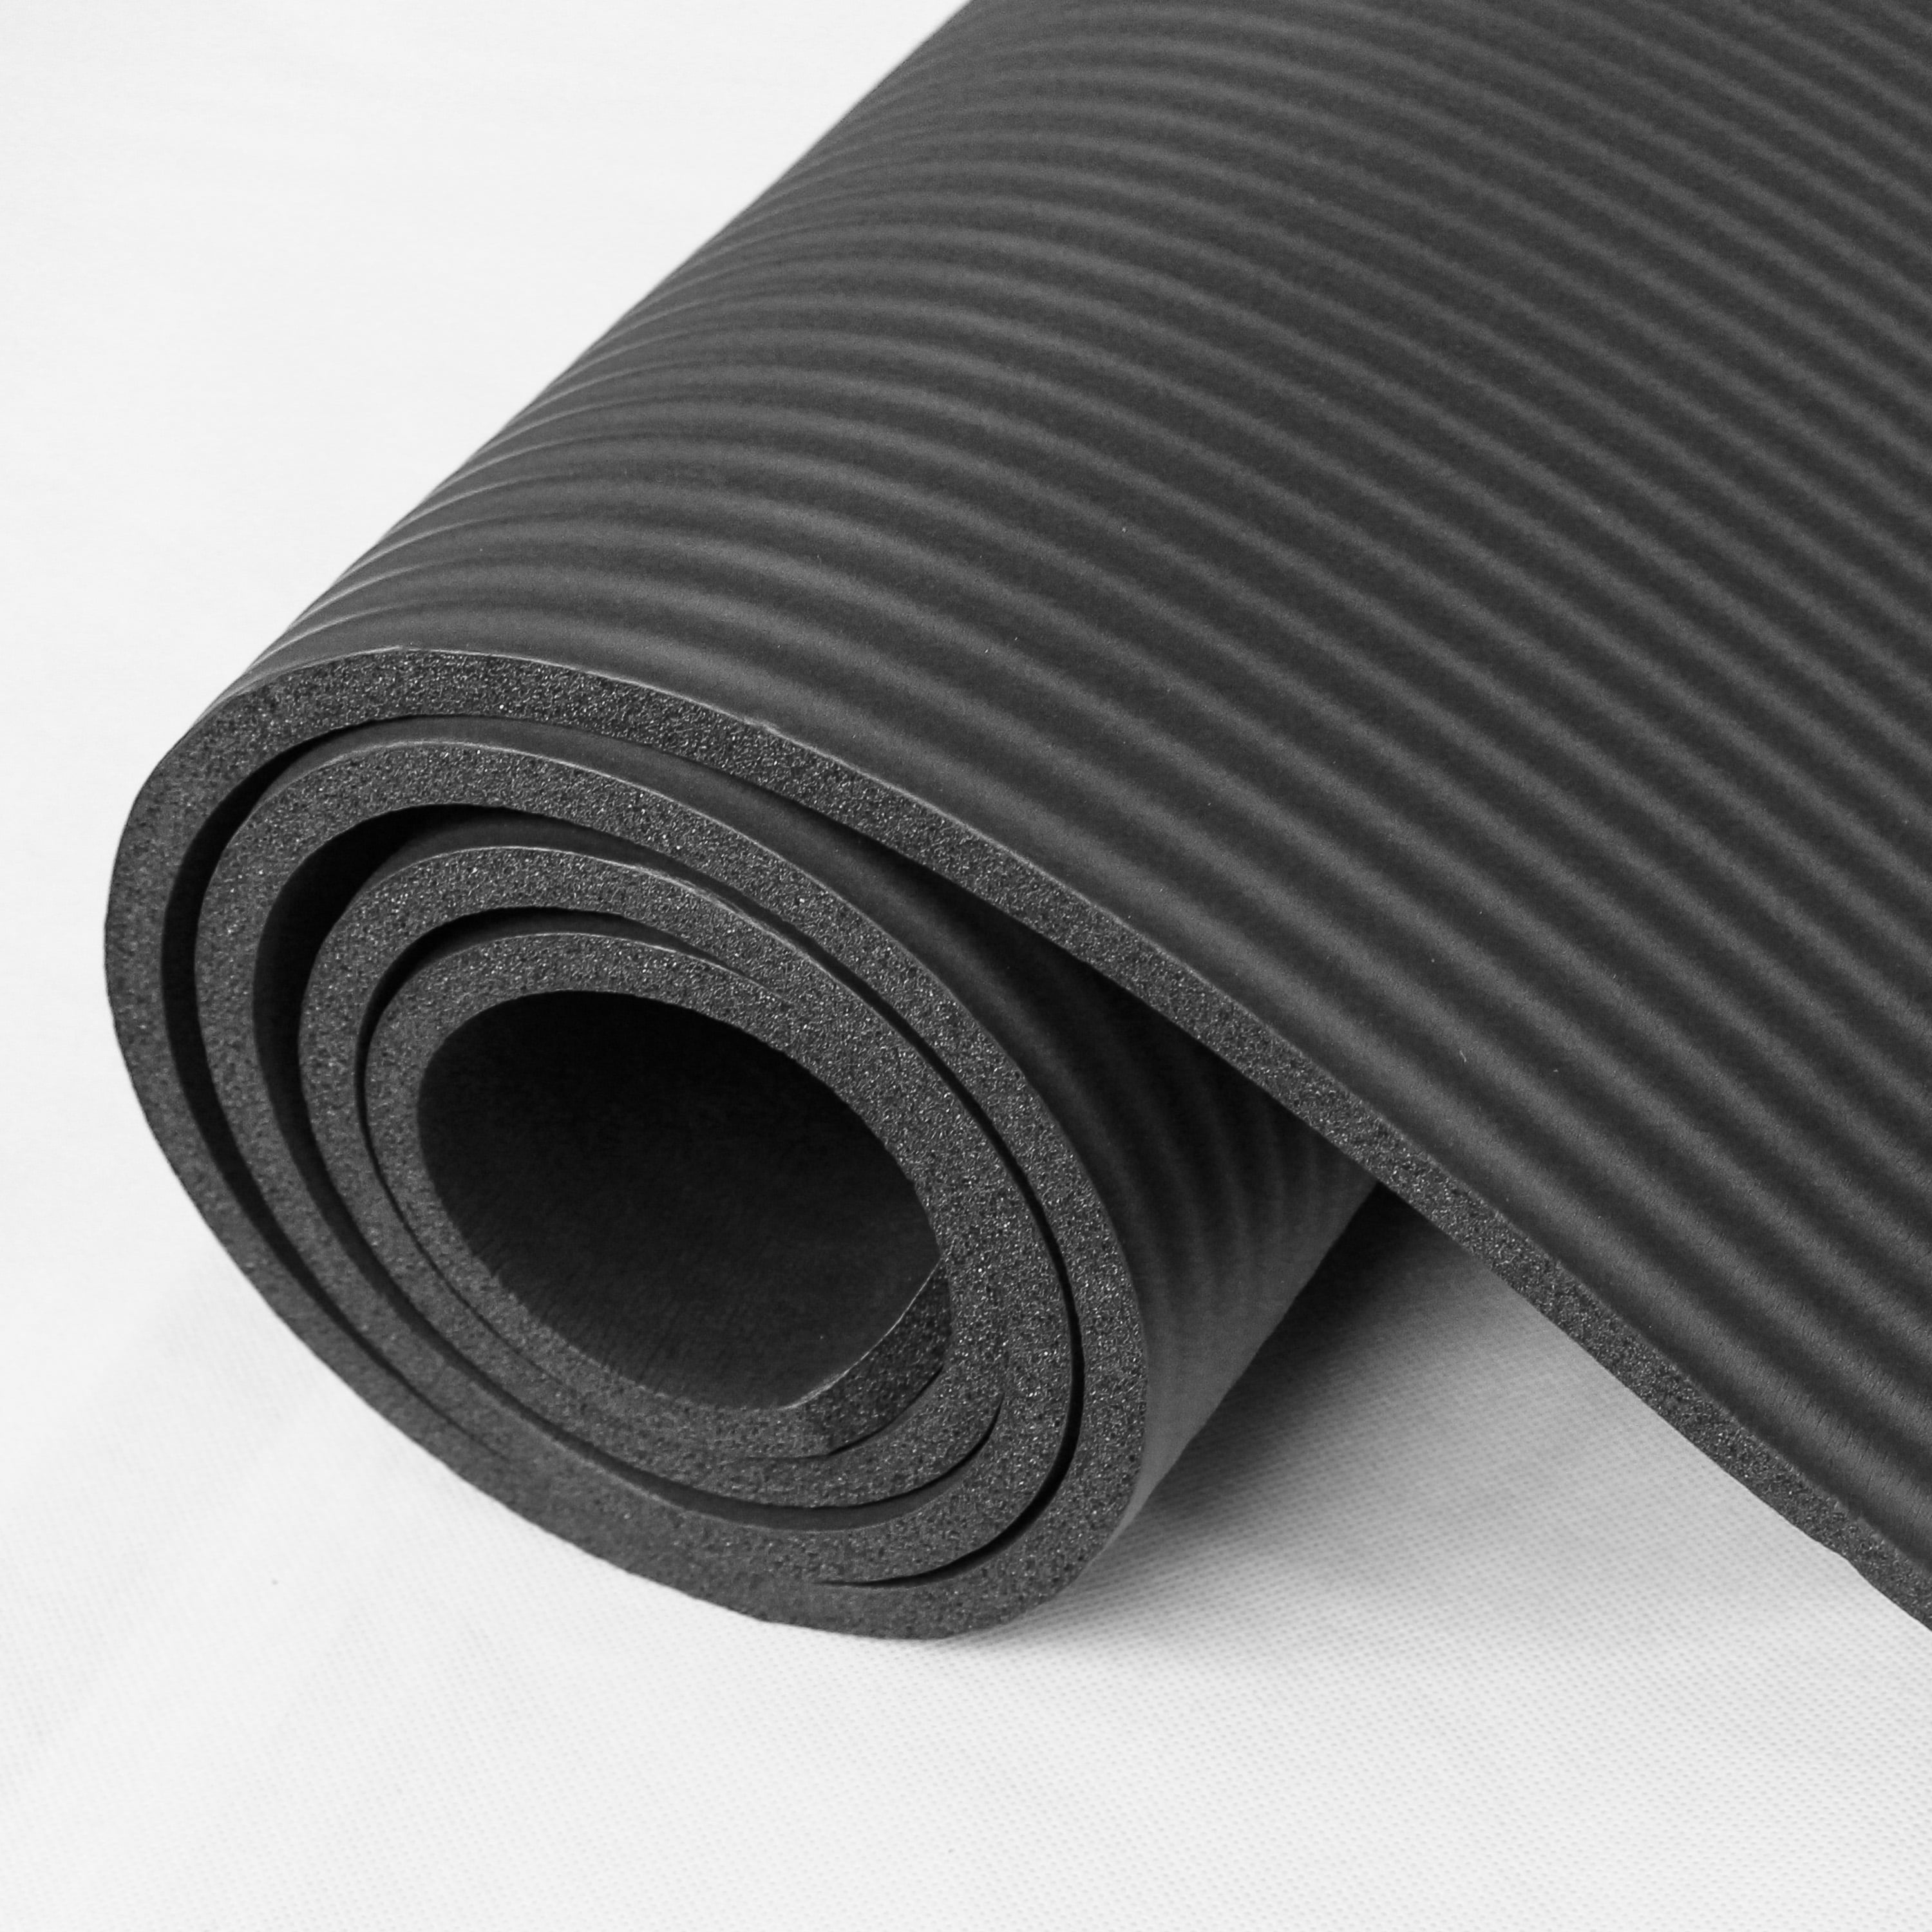 YUREN Exercise Mat 78x51 Extra Wide Large Yoga Mat Thick 10mm, Workout  Navy